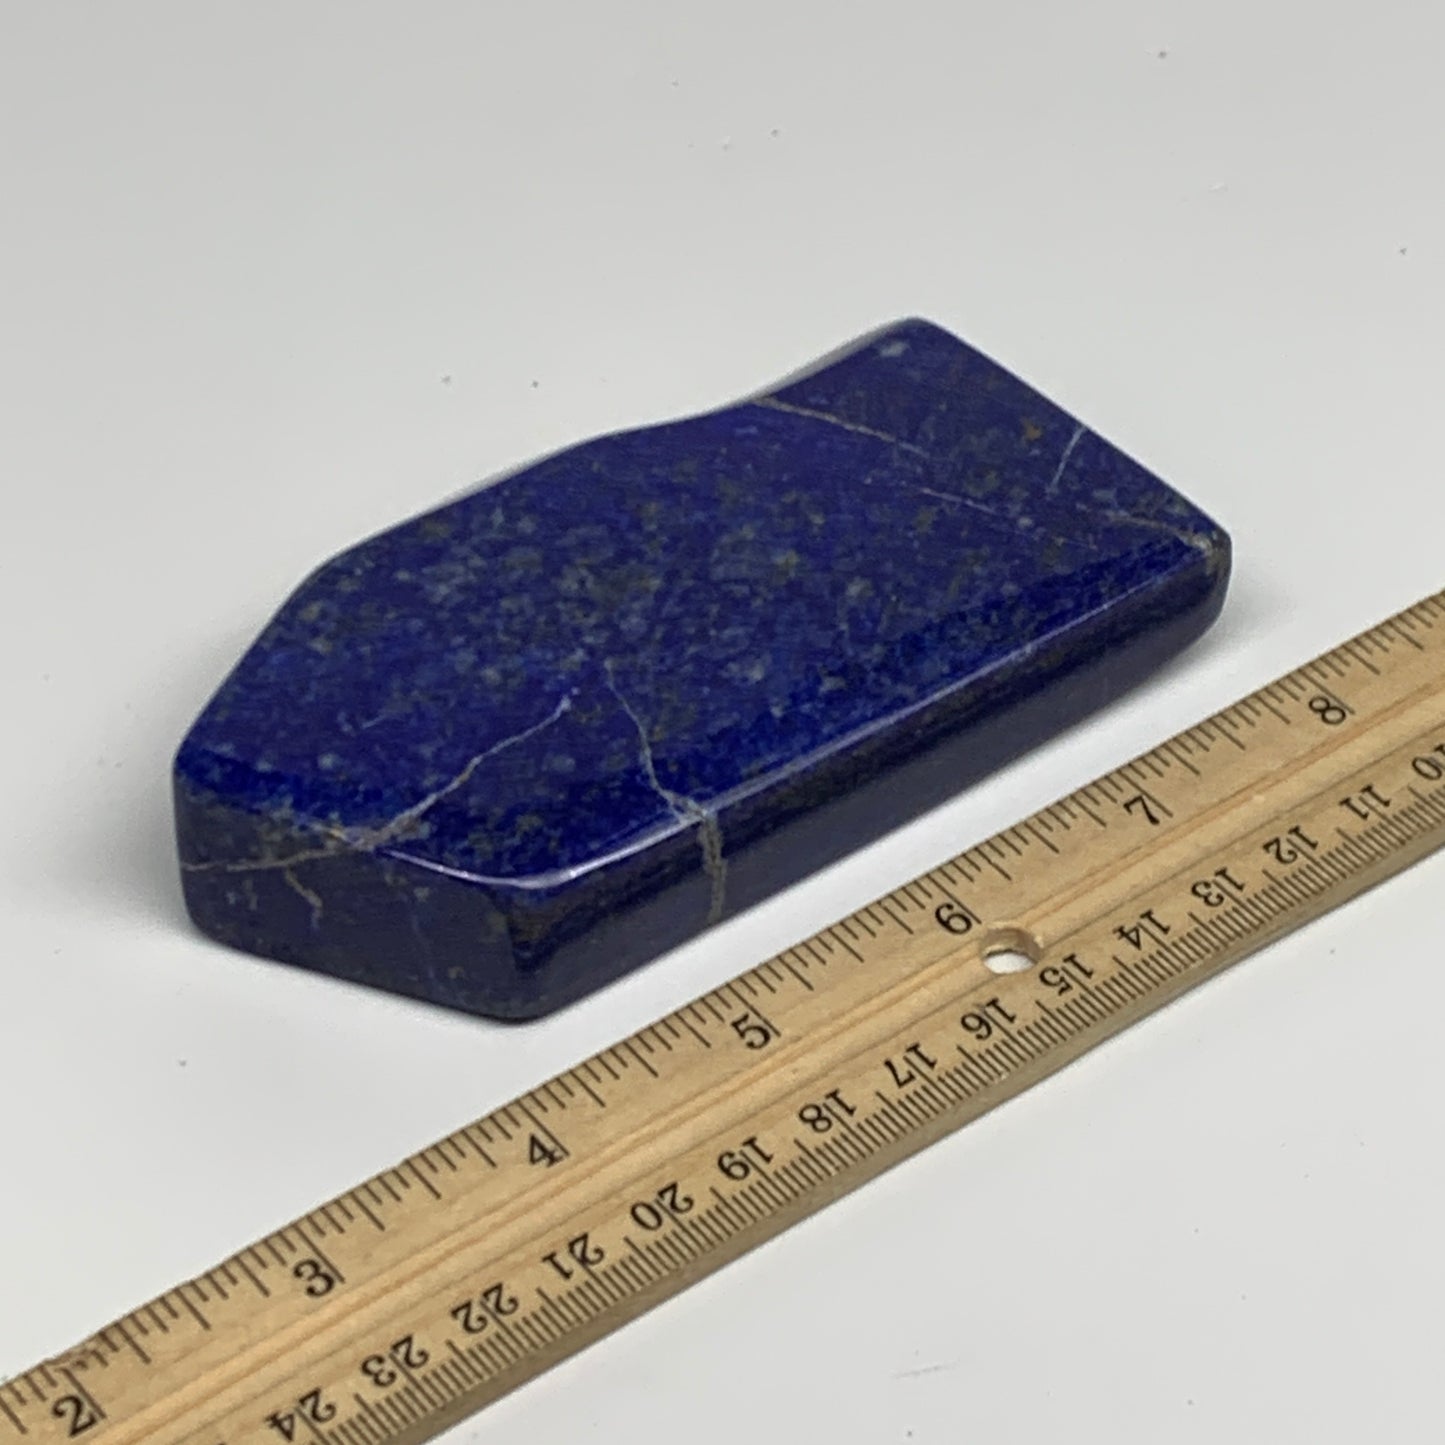 0.7 lbs, 4.3"x2.6"x0.7" Natural Freeform Lapis Lazuli from Afghanistan, B32907